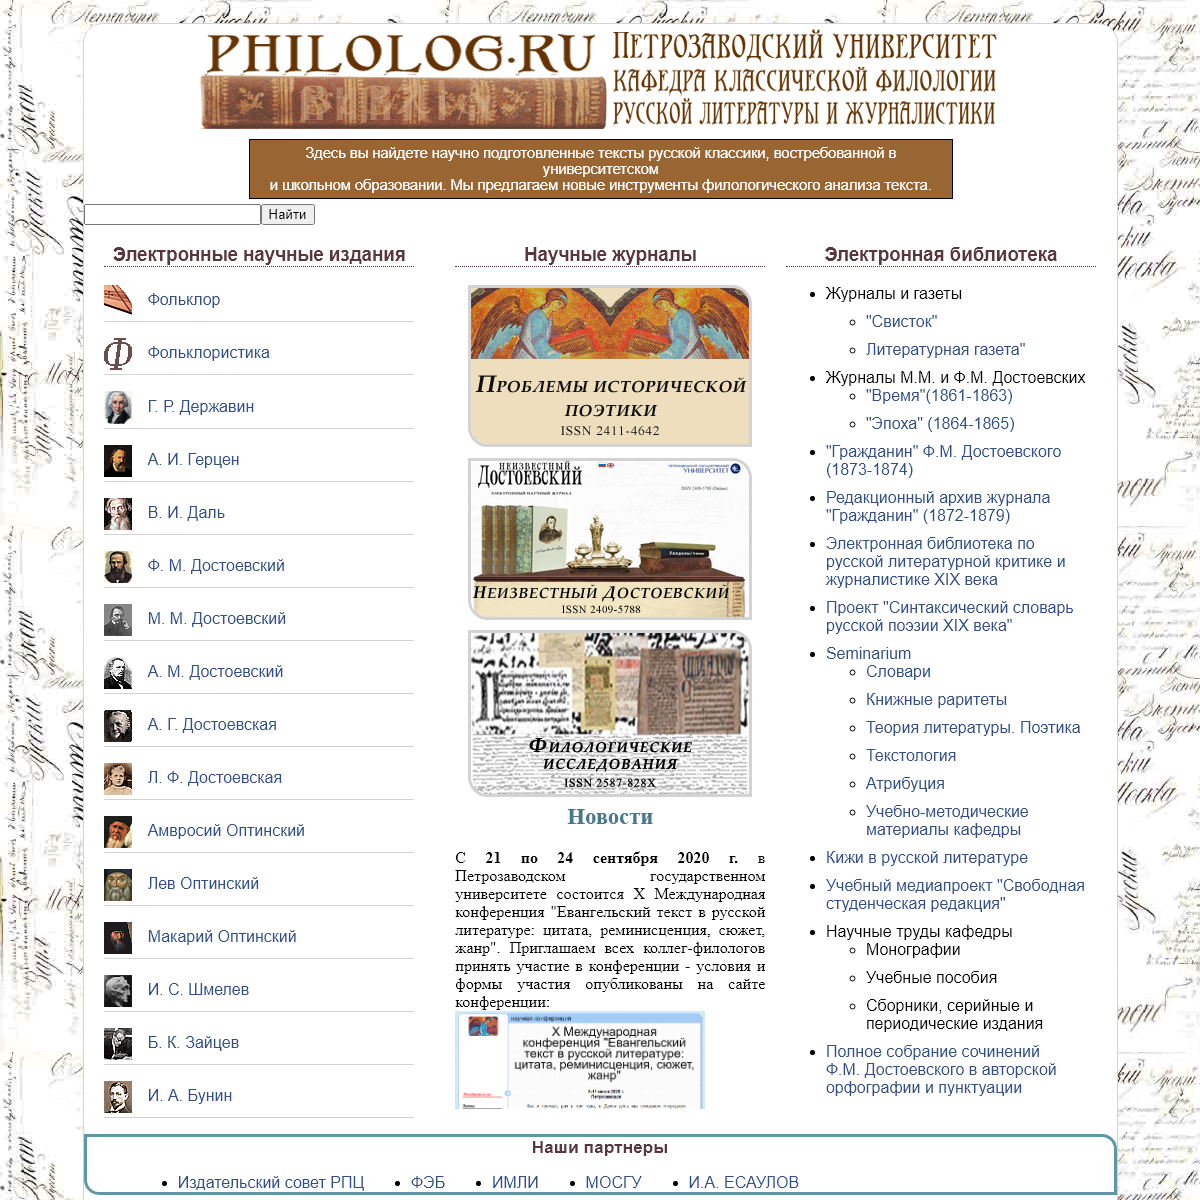 A complete backup of philolog.ru